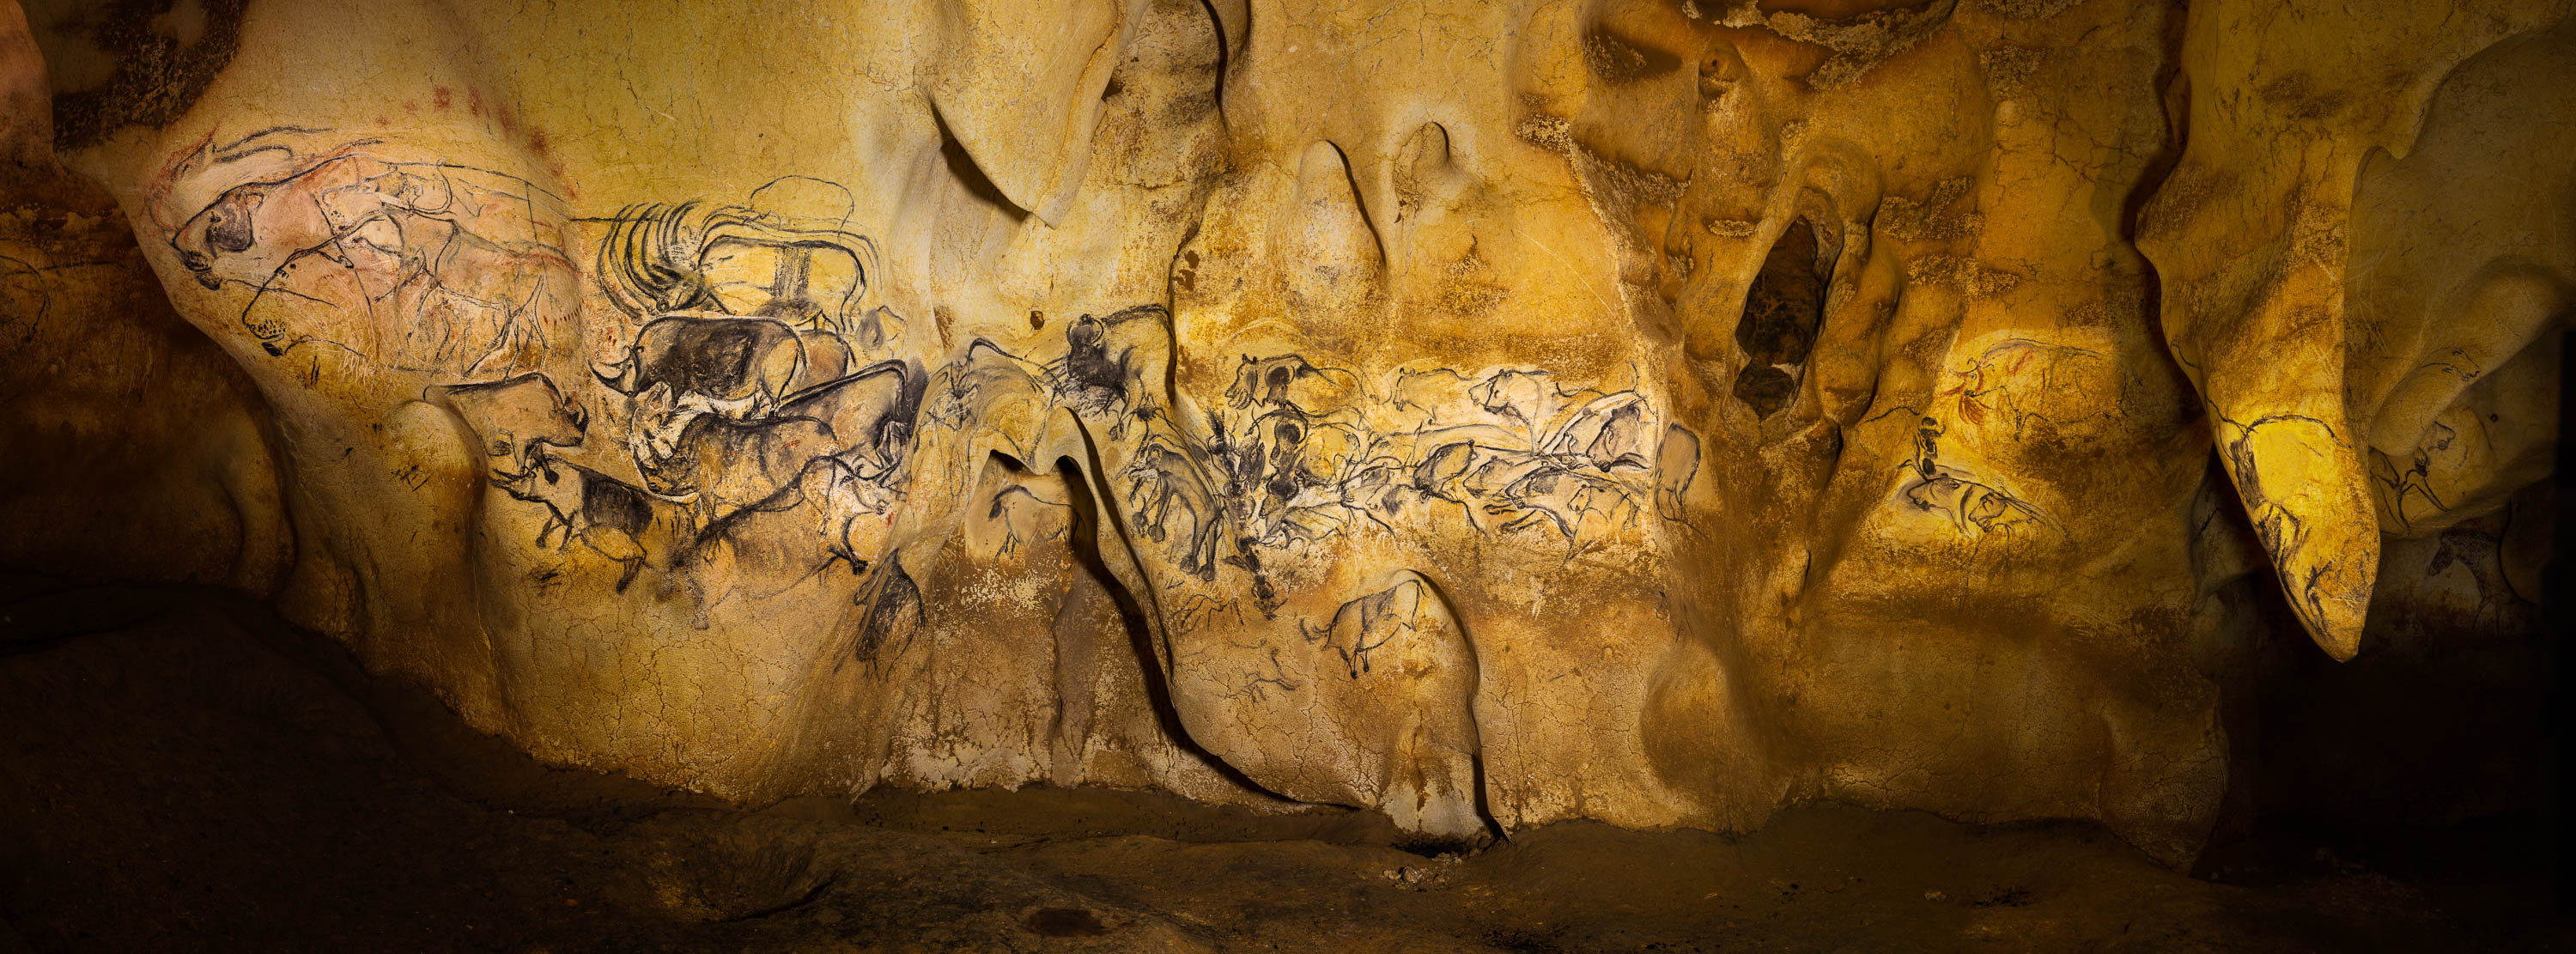 The Lion Panel of Chauvet Cave